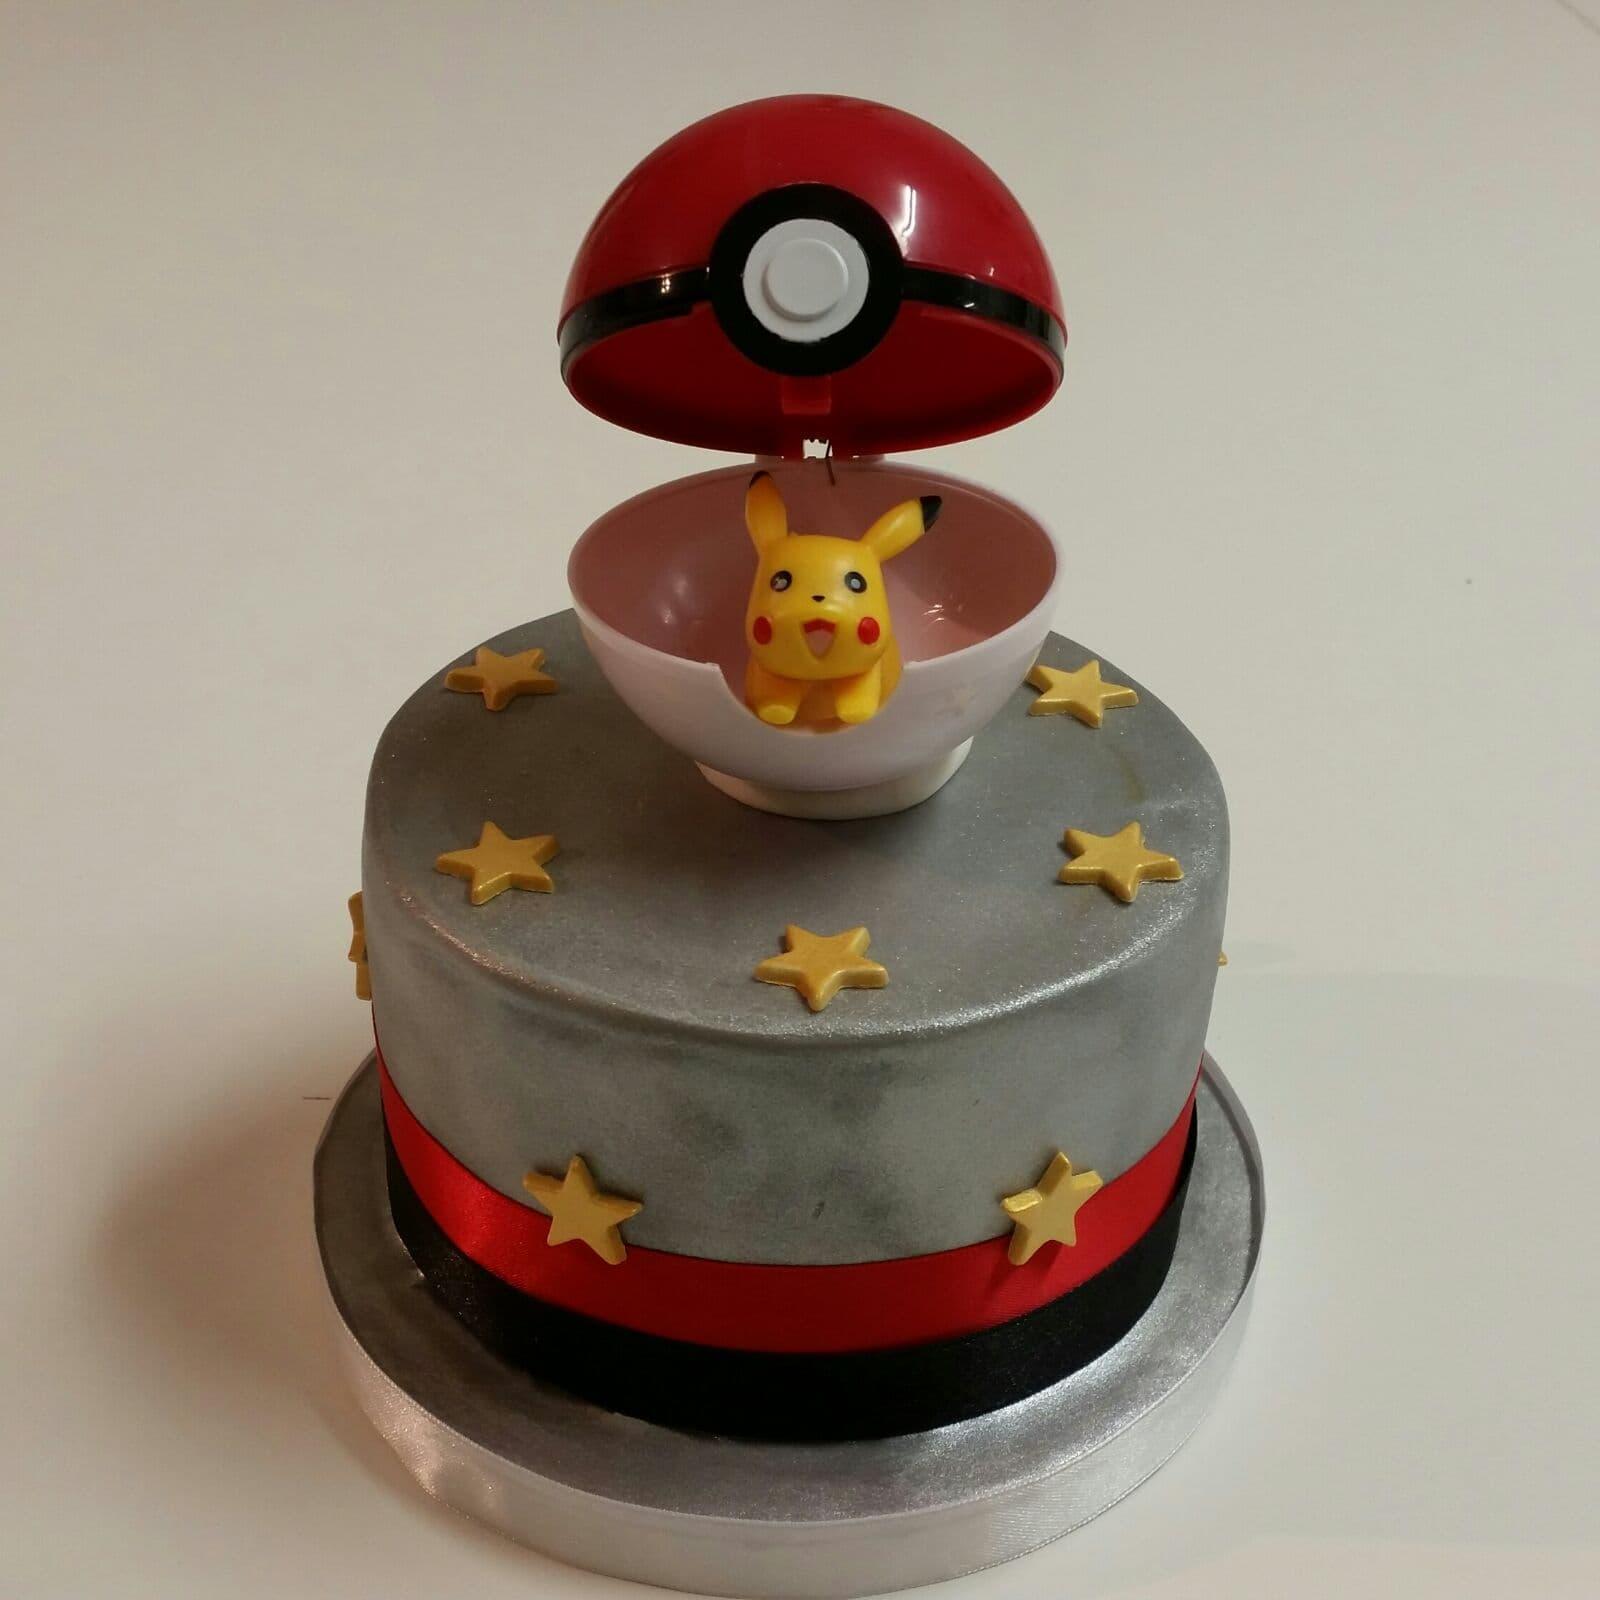 Bewust worden Misleidend vloek Bestel Pokemon bal + pikachu bij Cake, Bake & Love